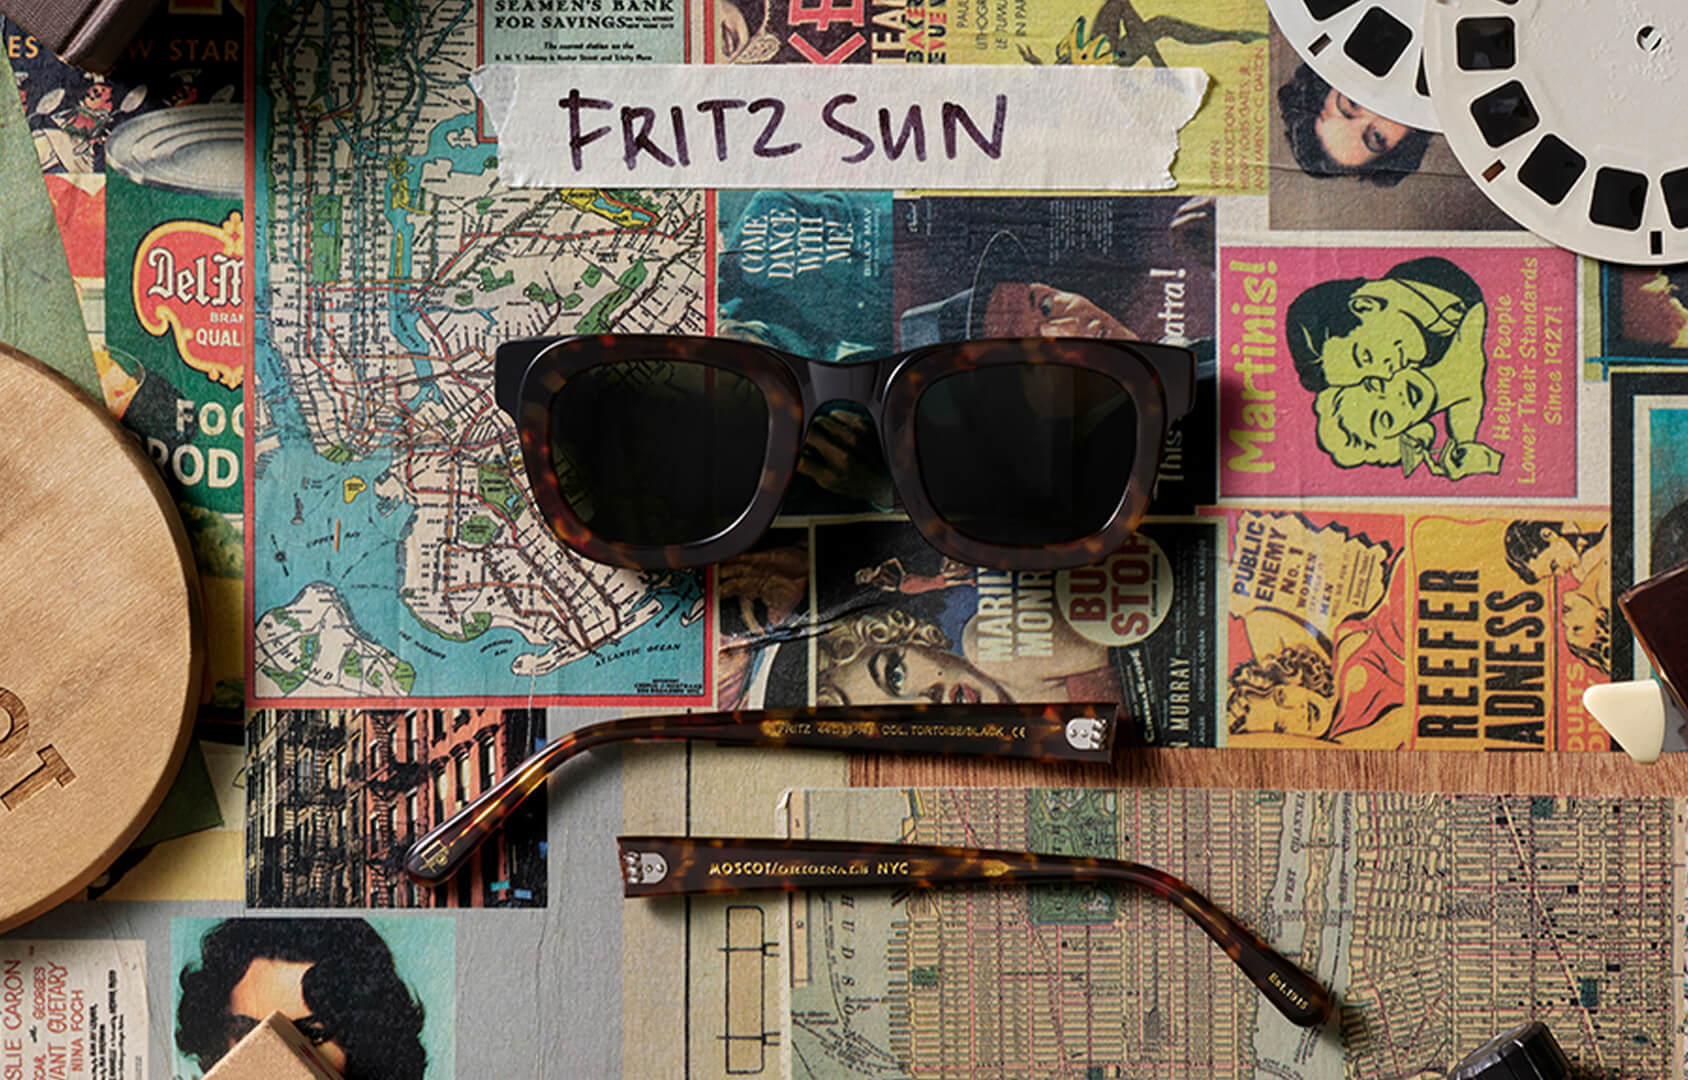 The FRITZ SUN